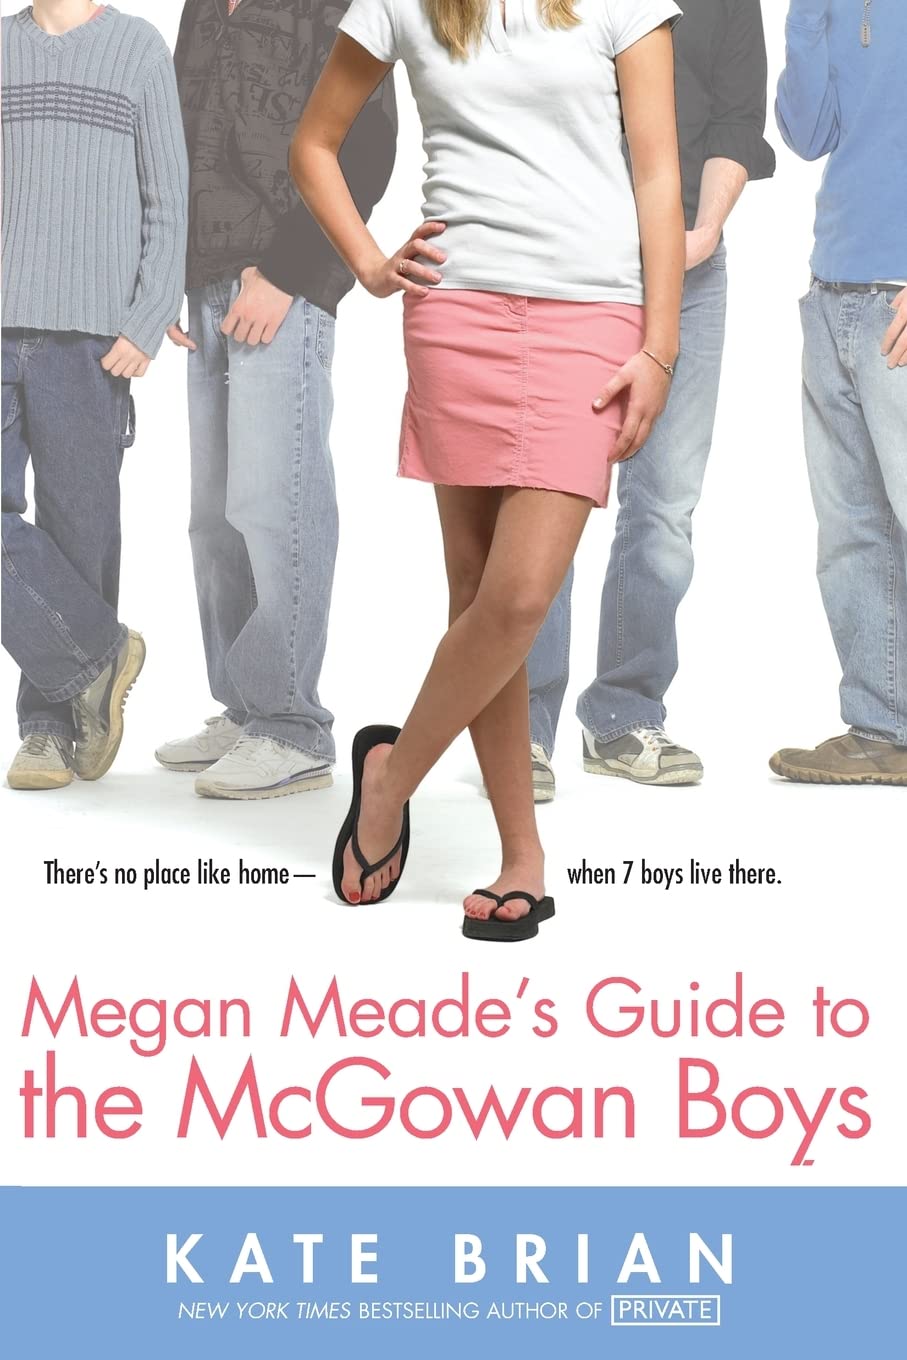 Megan Meade's Guide to the McGowan Boys